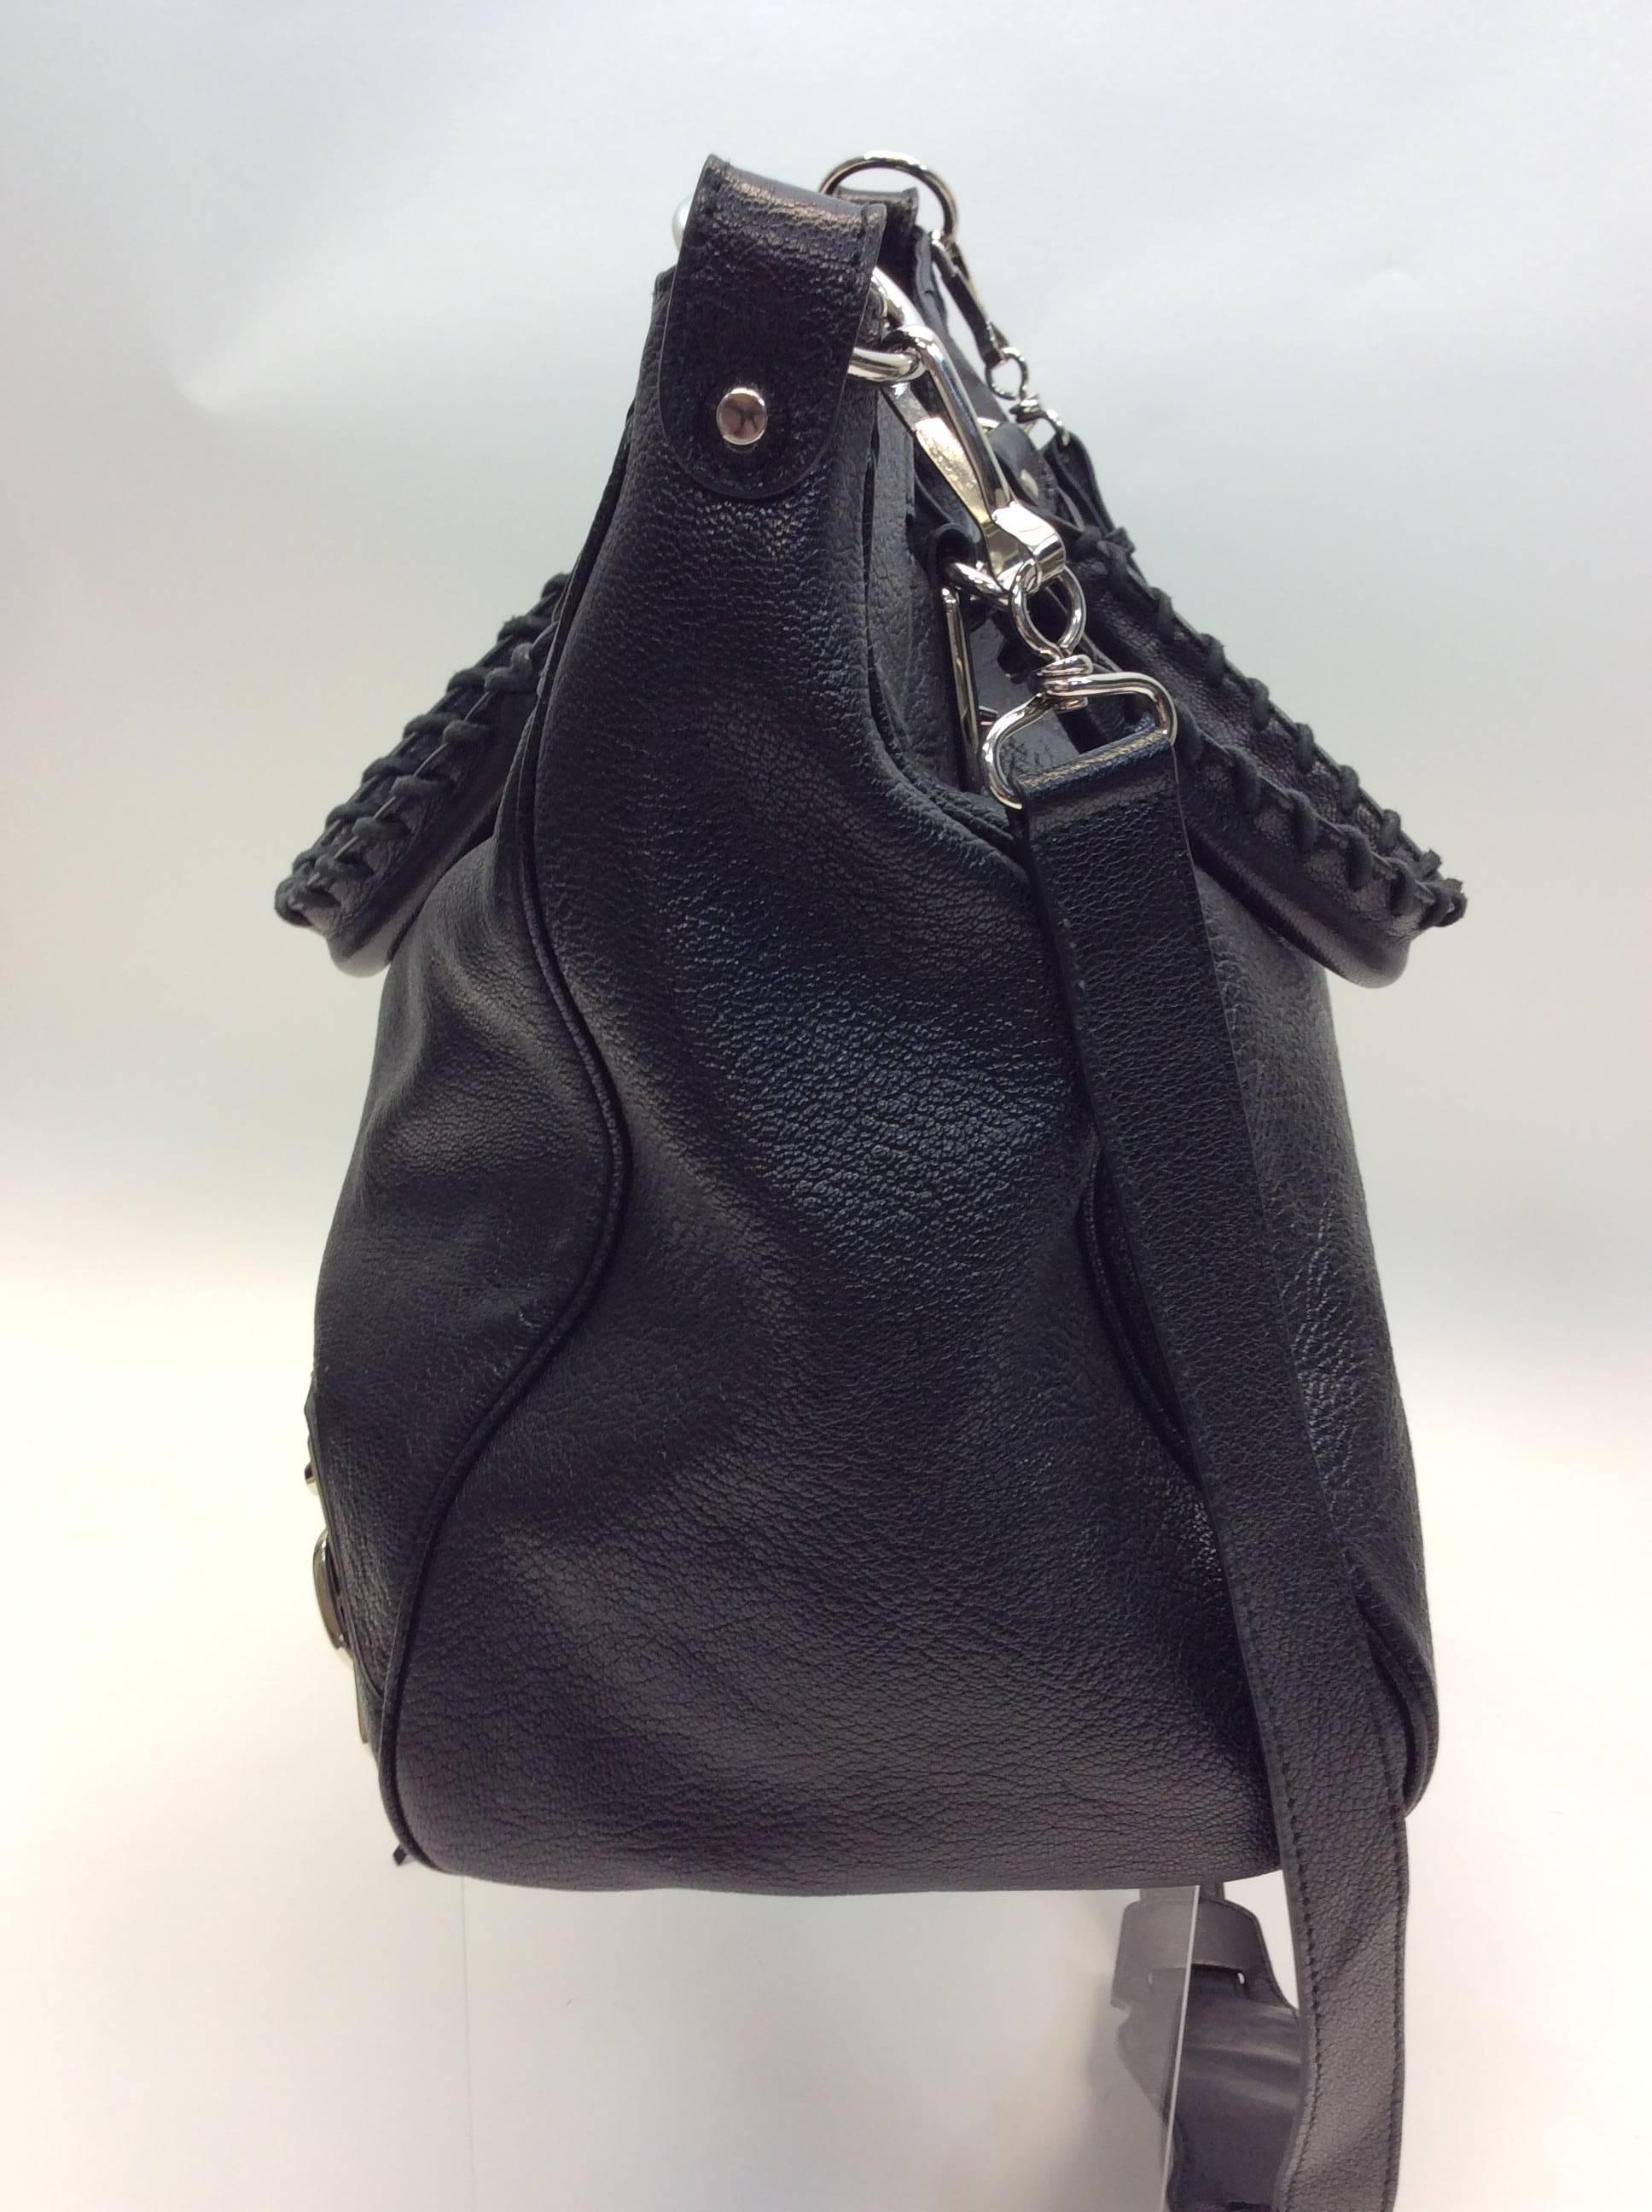 Balenciaga Black Metallic Edge Leather Handbag
Leather
$1699
Made in Italy
14